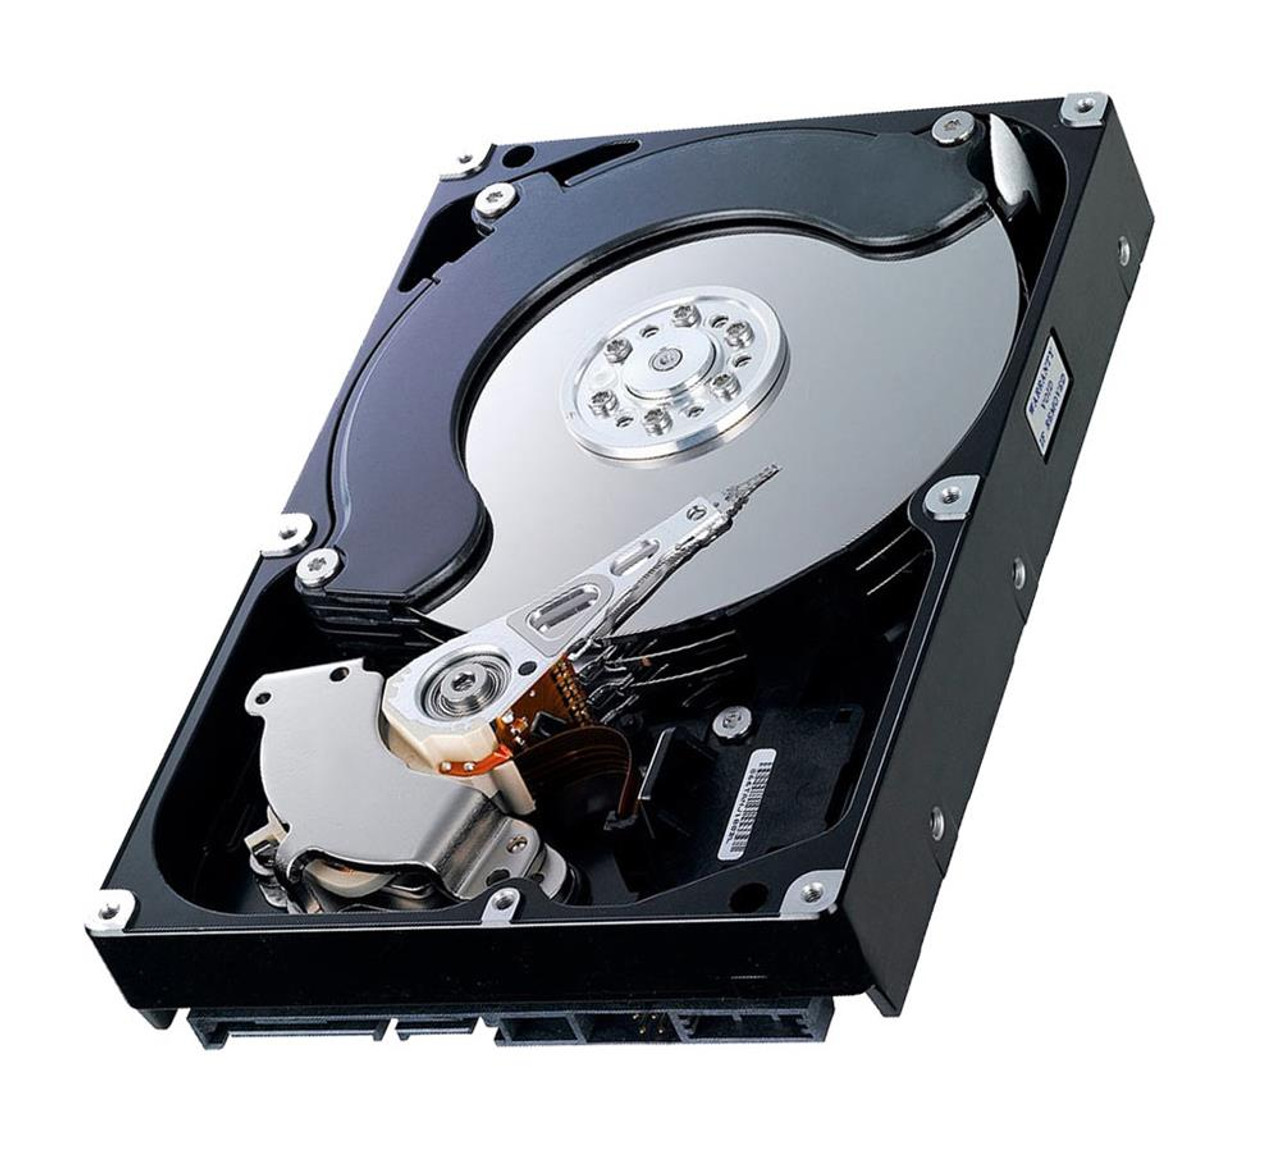 WD200AB-32CMB0 - Western Digital Caviar 20GB 5400RPM ATA-100 2MB Cache 3.5-inch Hard Disk Drive